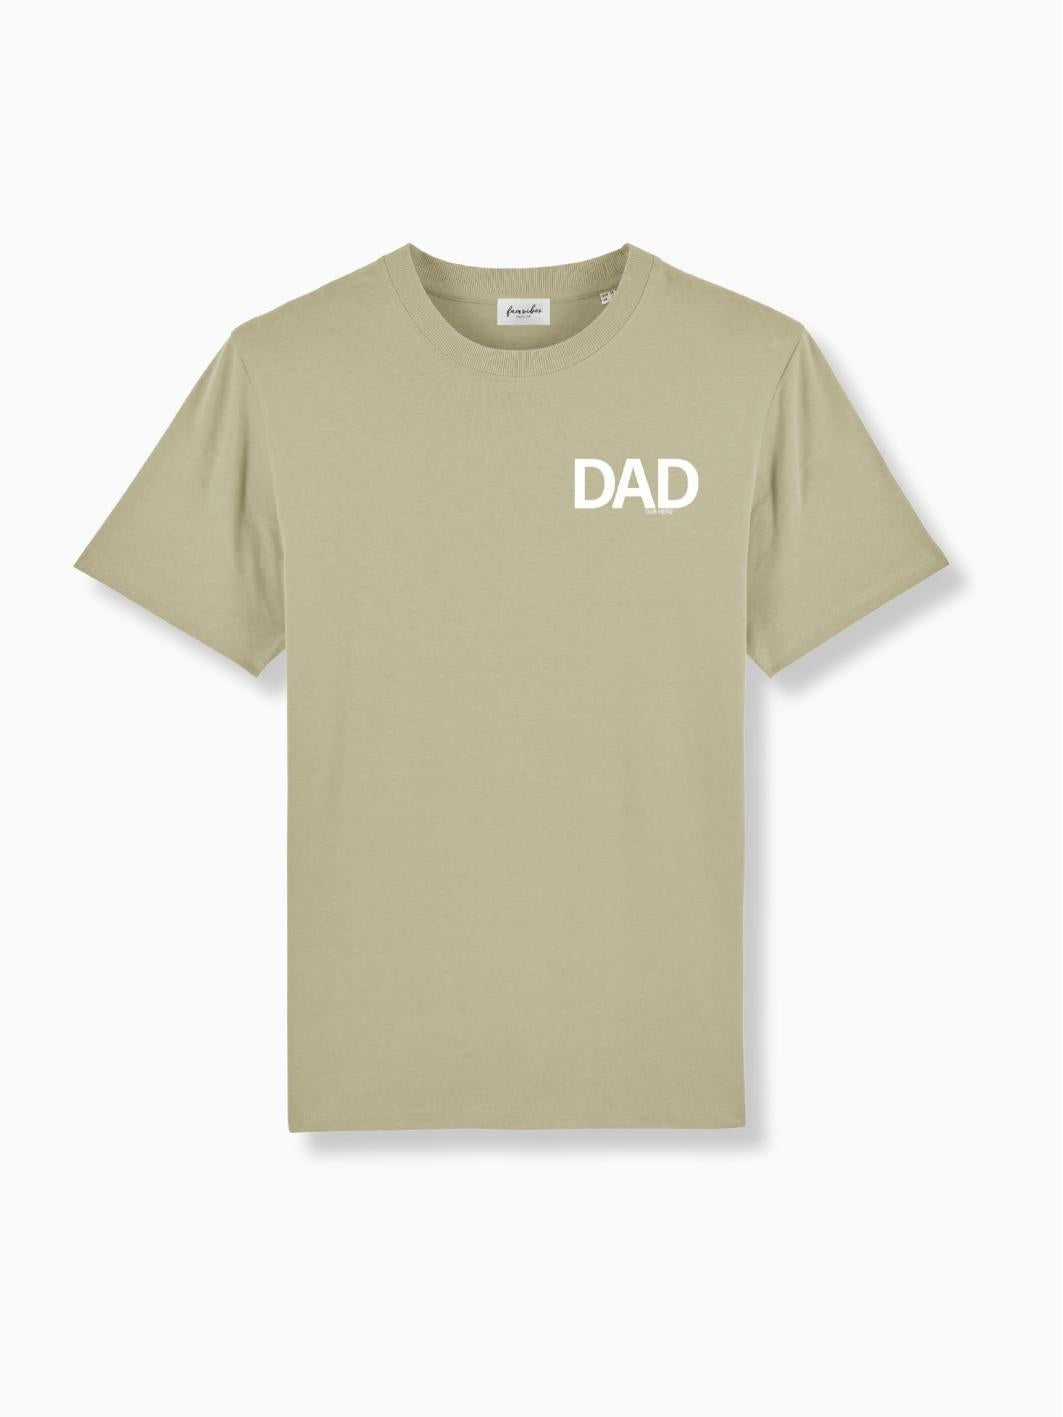 DAD OUR HERO Herren T-Shirt - sage - FAMVIBES 